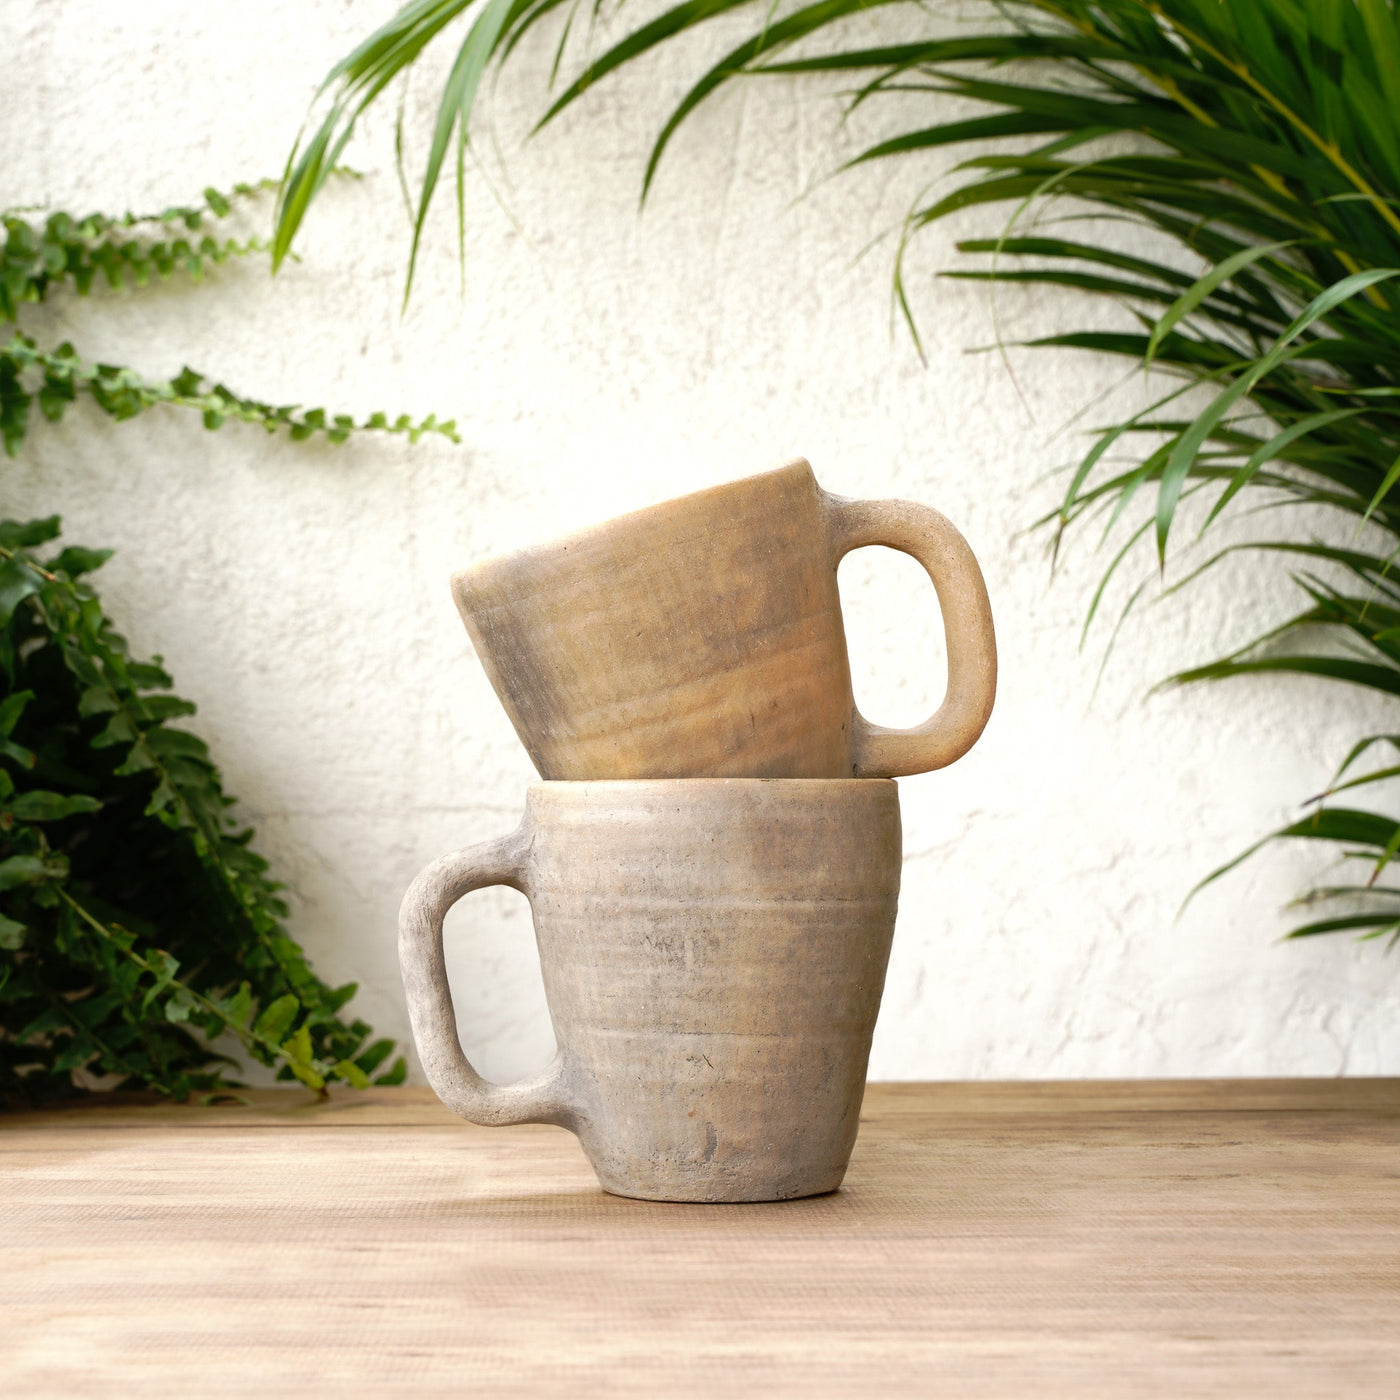 Artisan-crafted ceramic coffee mug with natural unglazed exterior texture